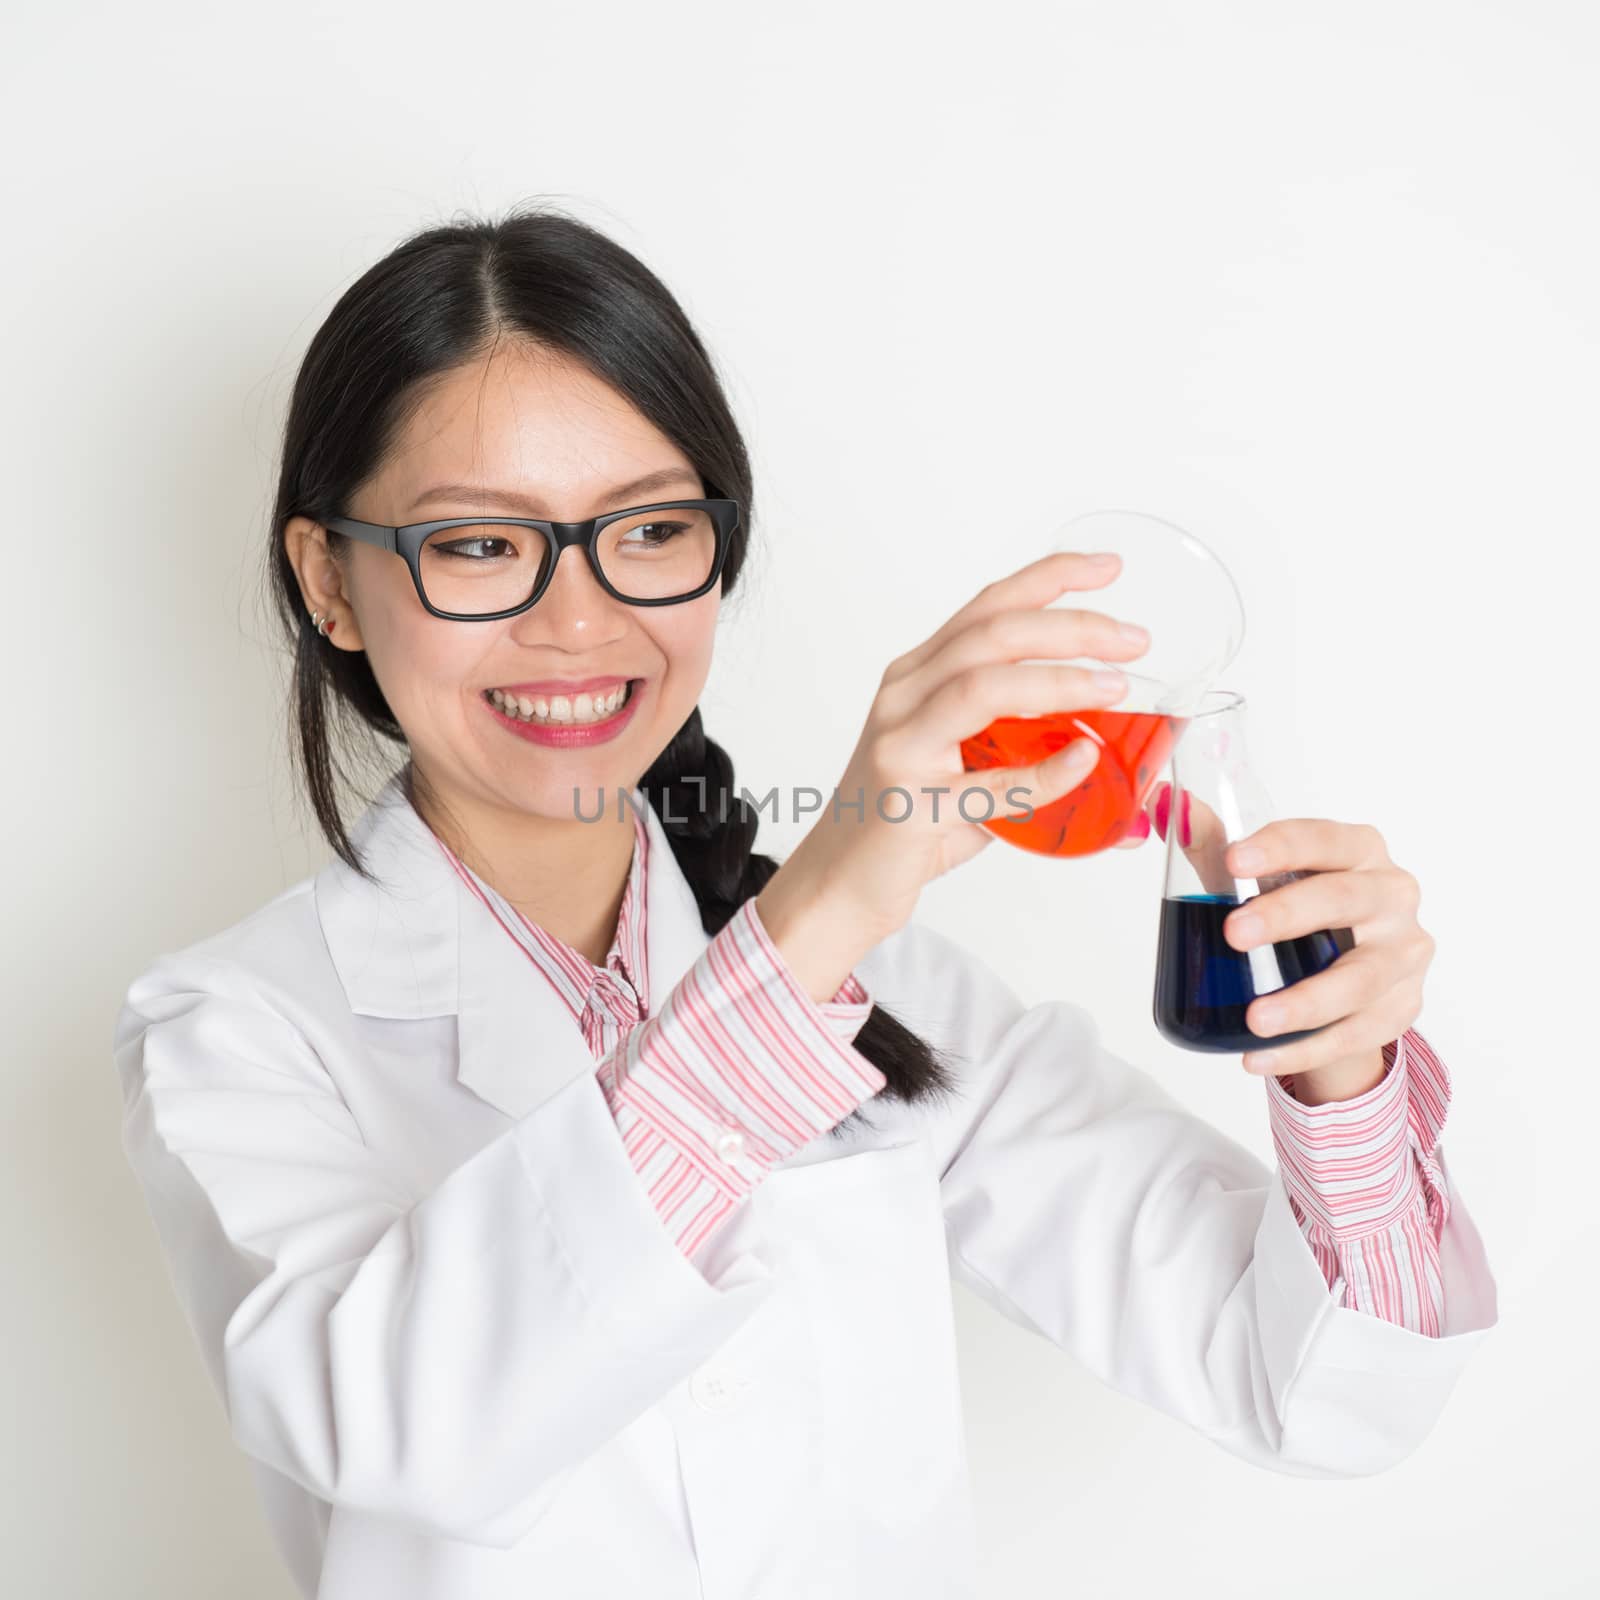 Asian girl biochemistry student doing liquid sample test analysis, on plain background.